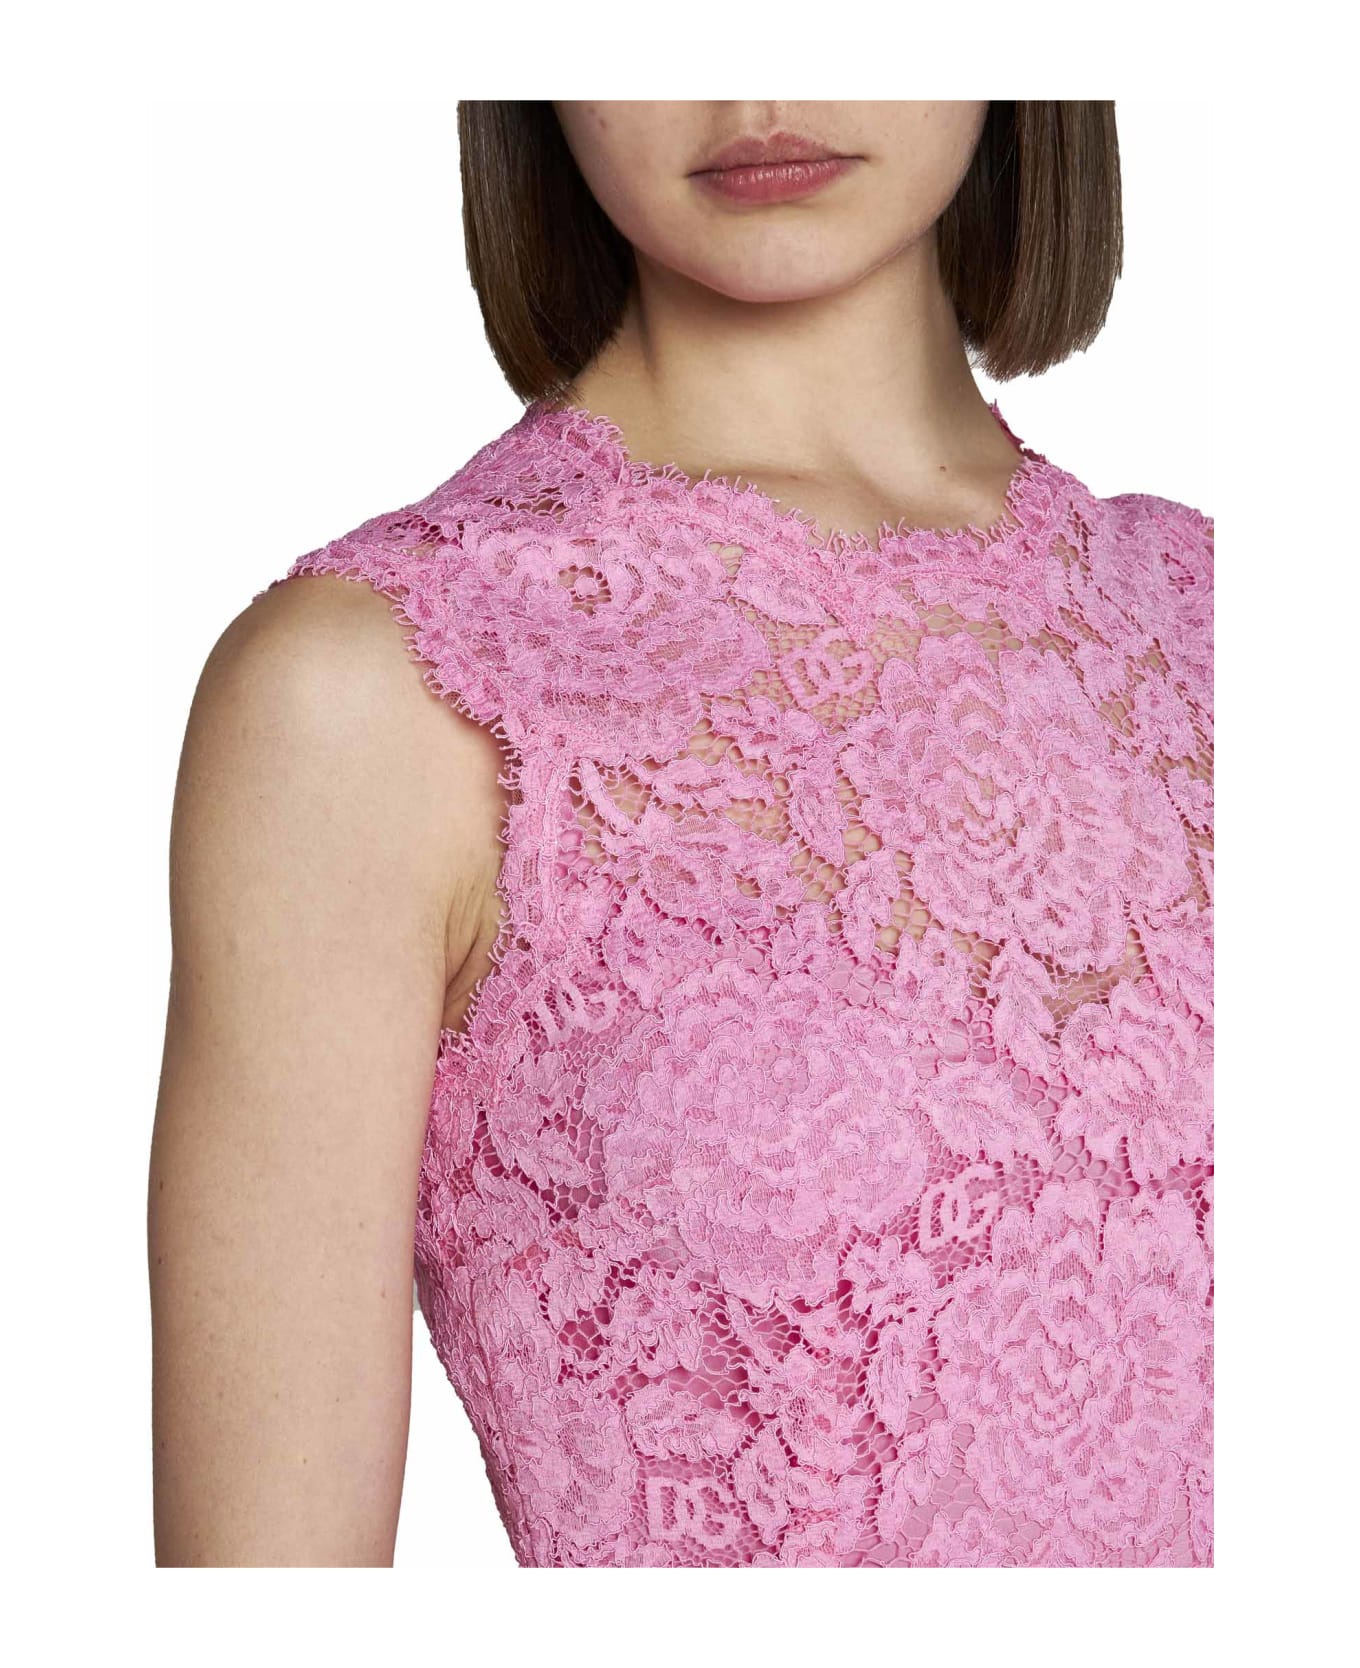 Dolce & Gabbana Lace Dress - Pink